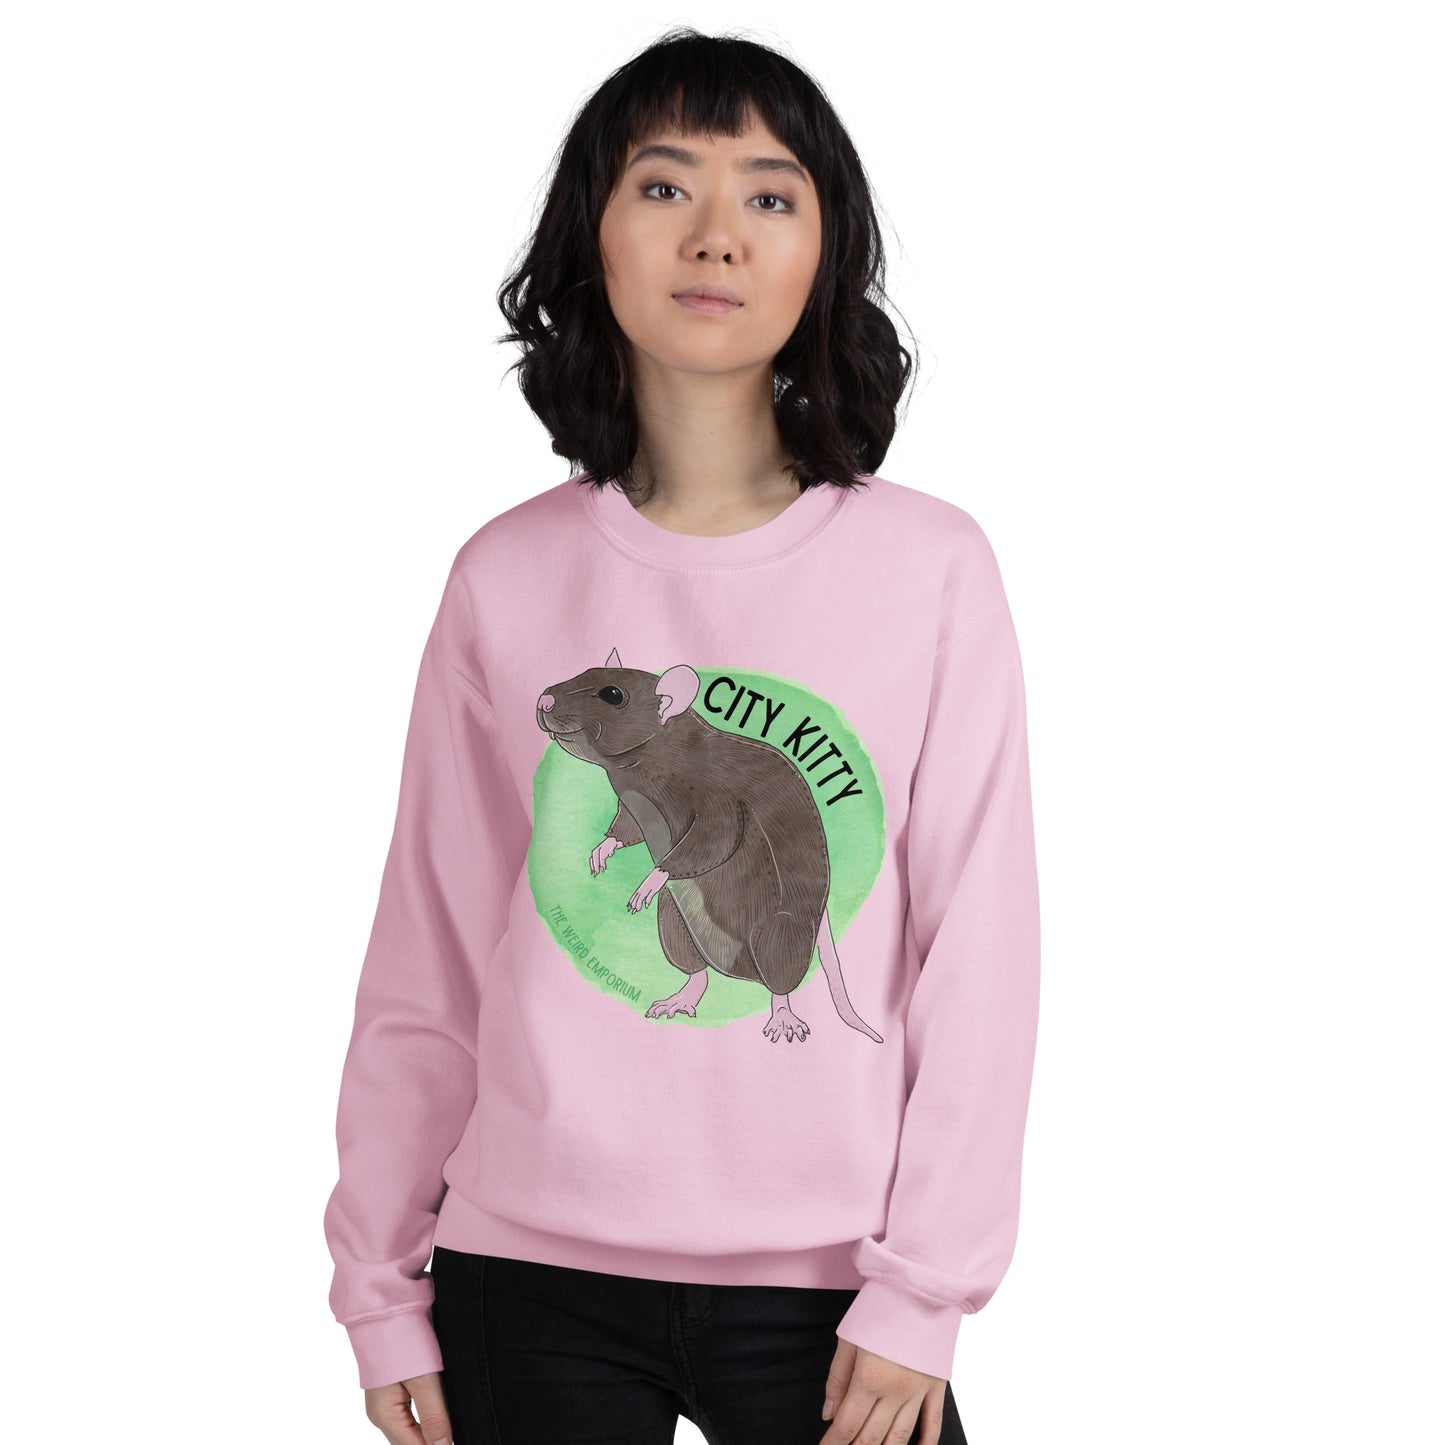 City Kitty Sweatshirt